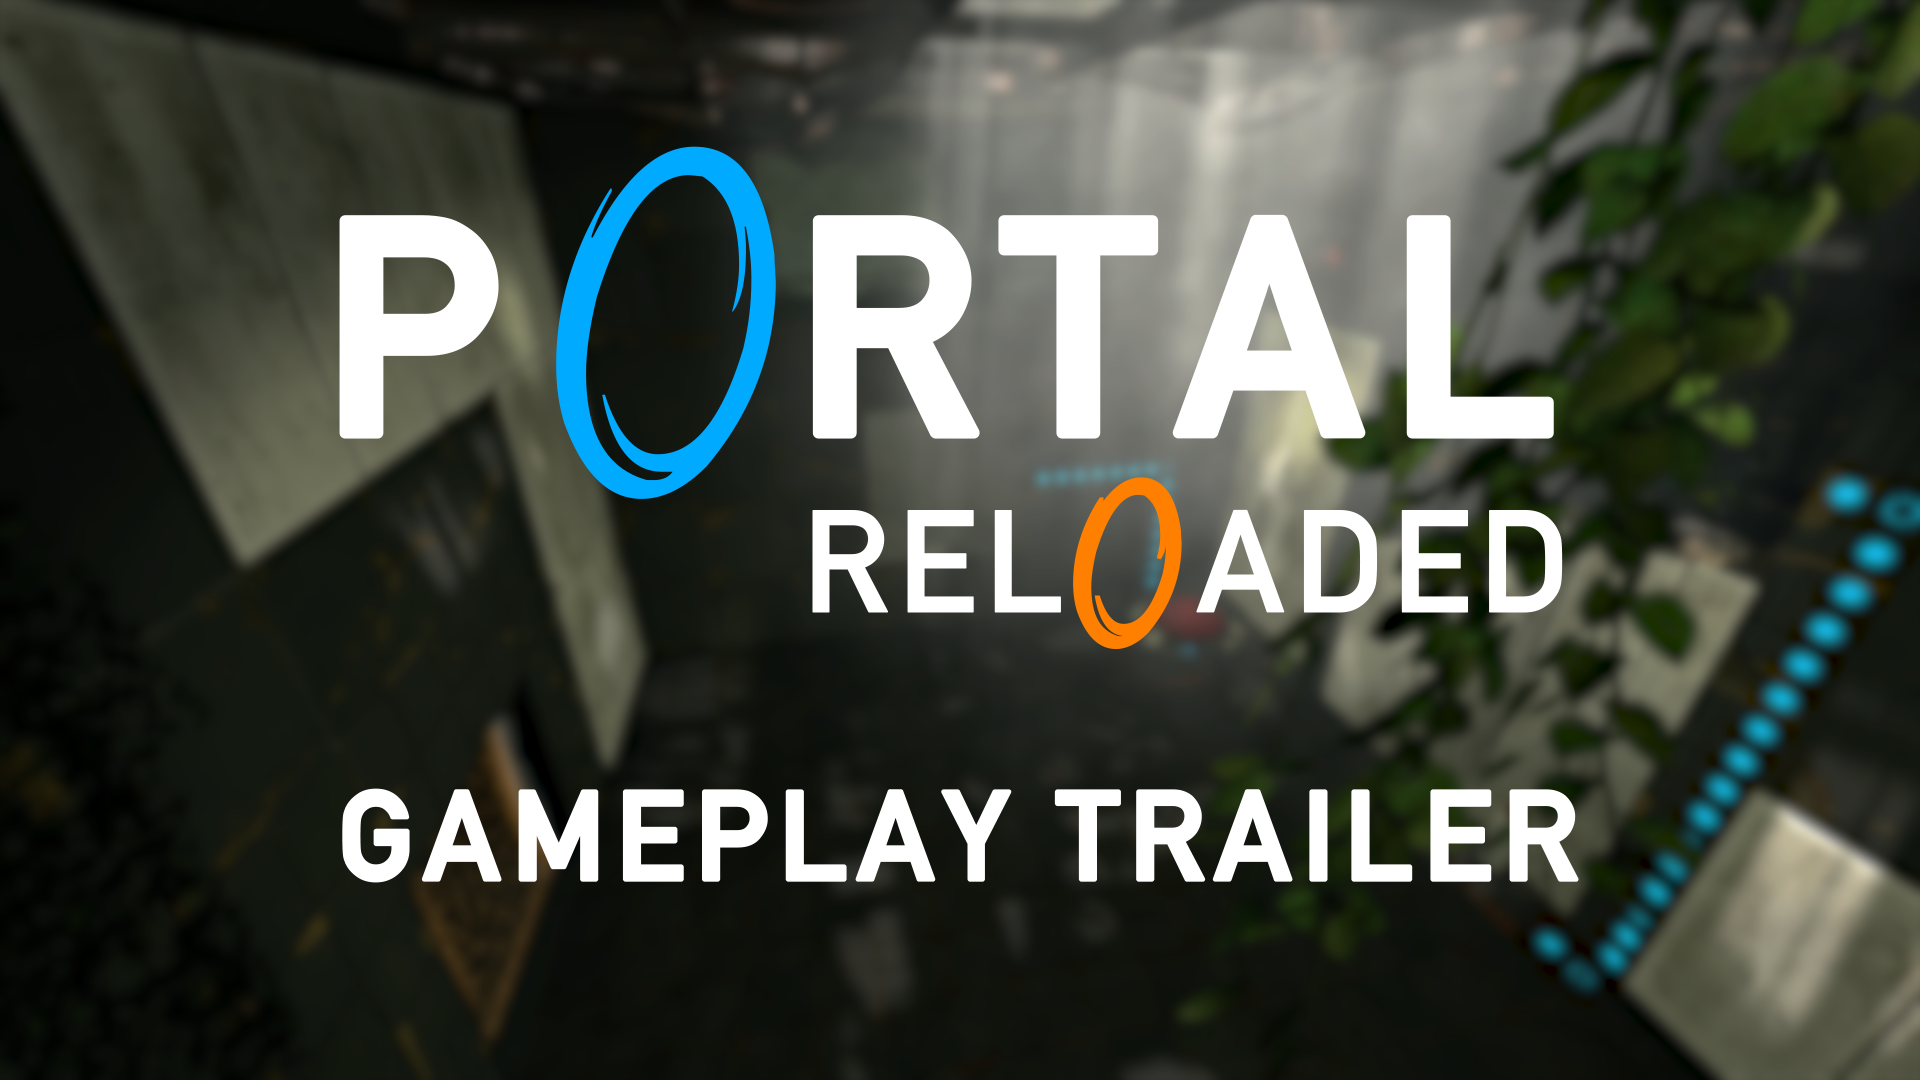 Https portal new. Портал Reloaded. Портал релоэд. Новый Portal Reloaded. Portal Reloaded логотип.